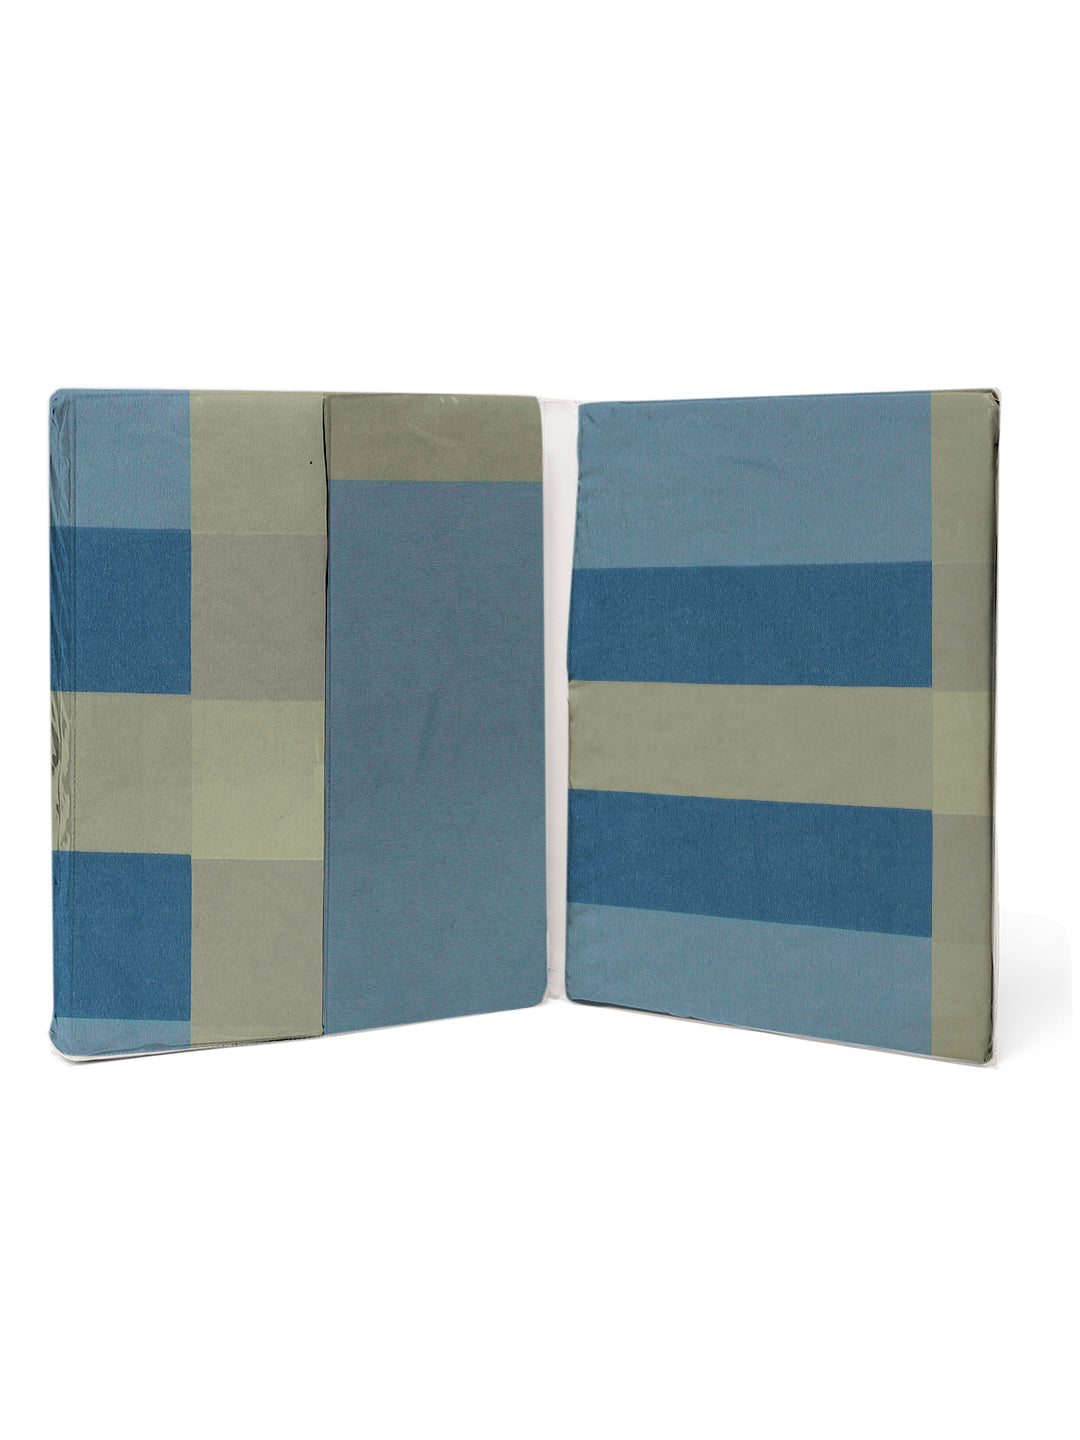 Klotthe Blue Geometric 300 TC Cotton Blend Elasticated Double Bedsheet Set in Book Fold Packing